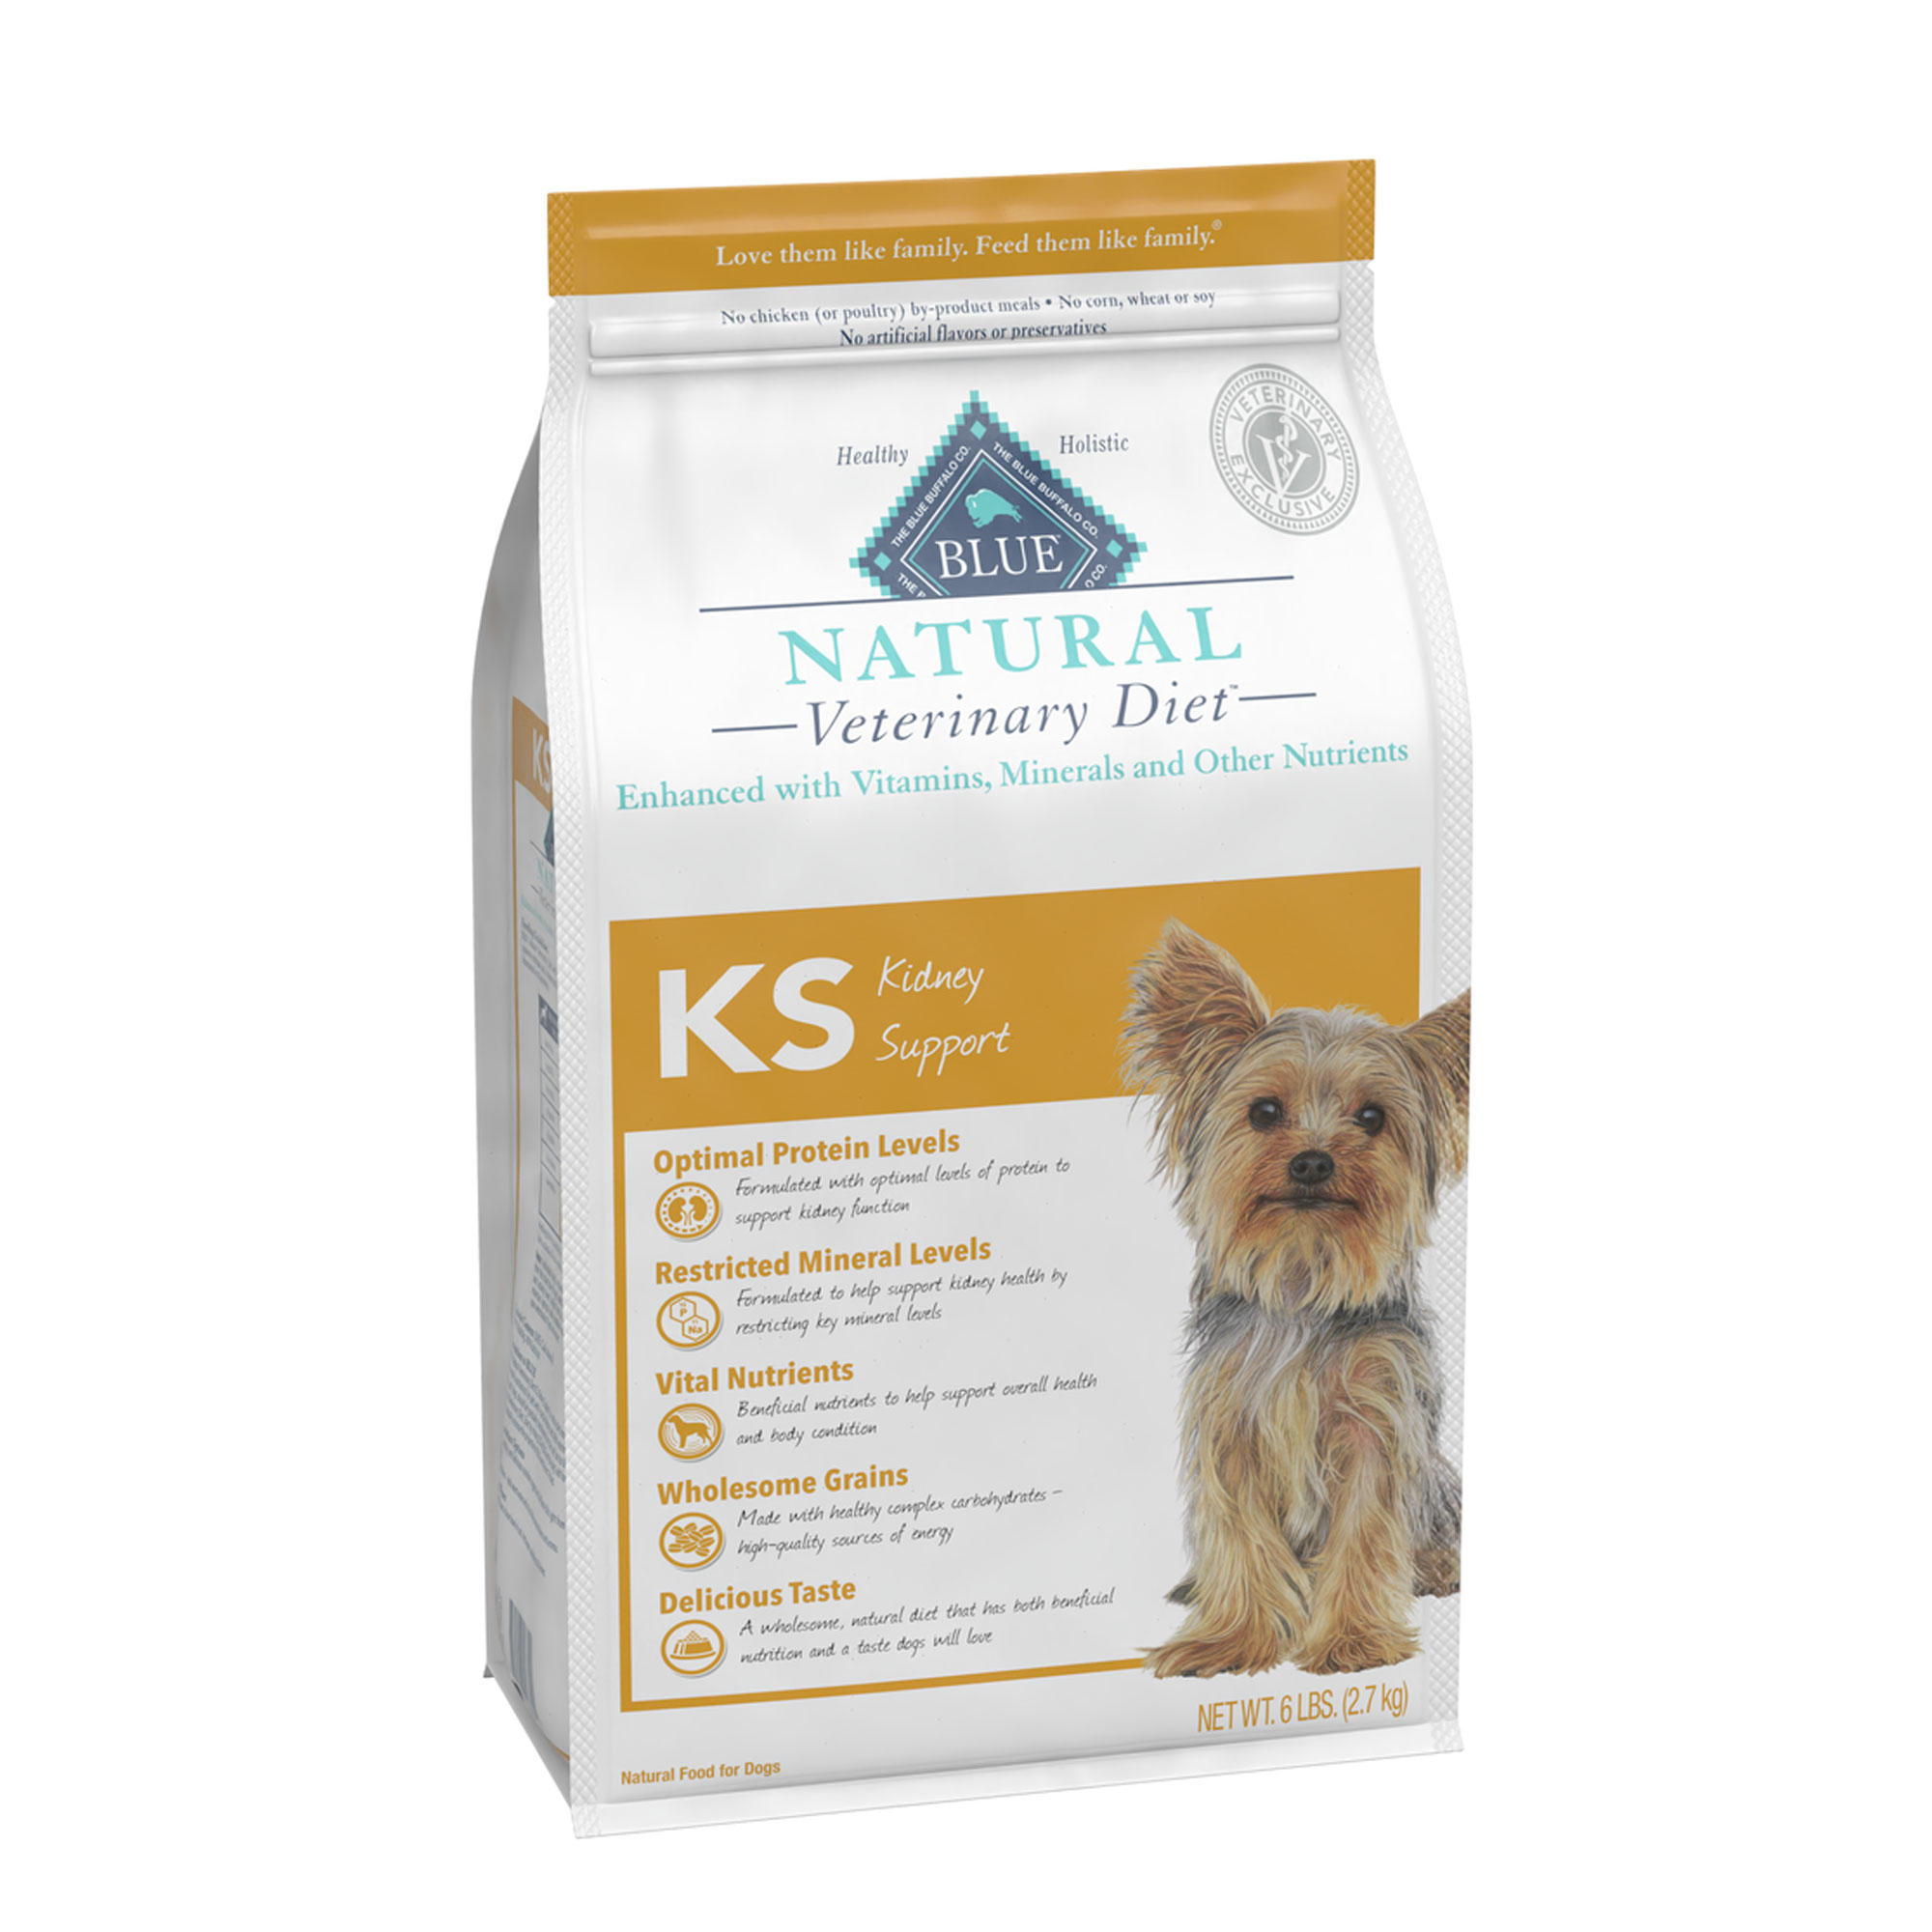 BLUE Natural Veterinary Diet KS Kidney Support Dry Dog Food Usage